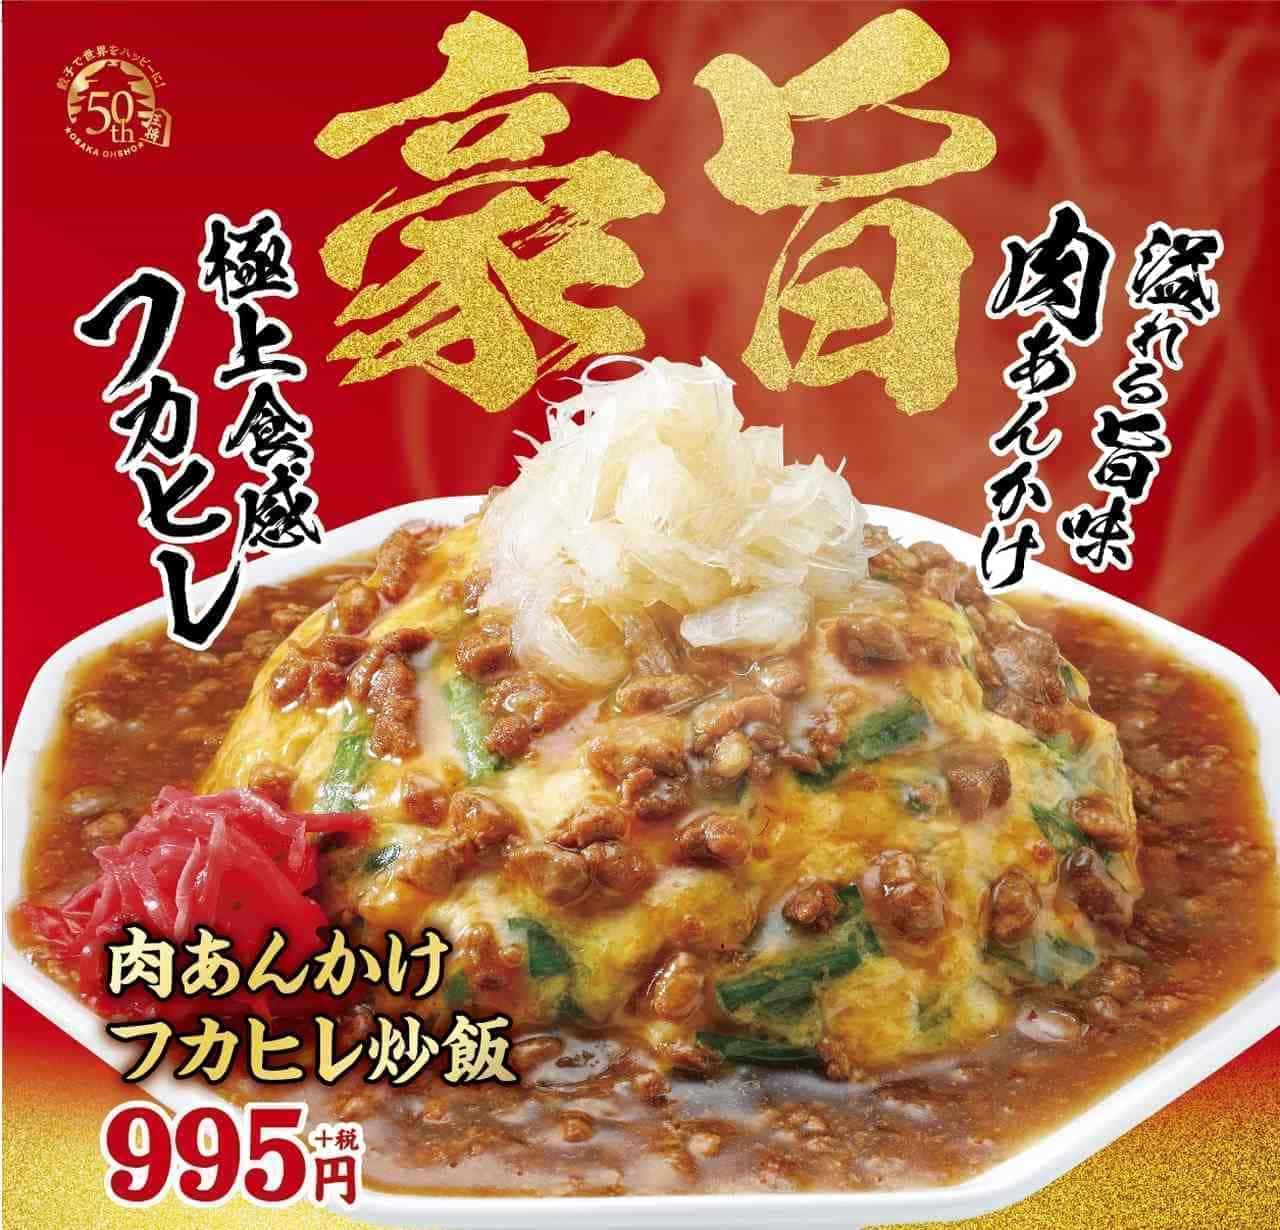 Osaka Ohsho 50th Anniversary Limited Menu 4th "Meat Ankake Shark Fin Fried Rice"